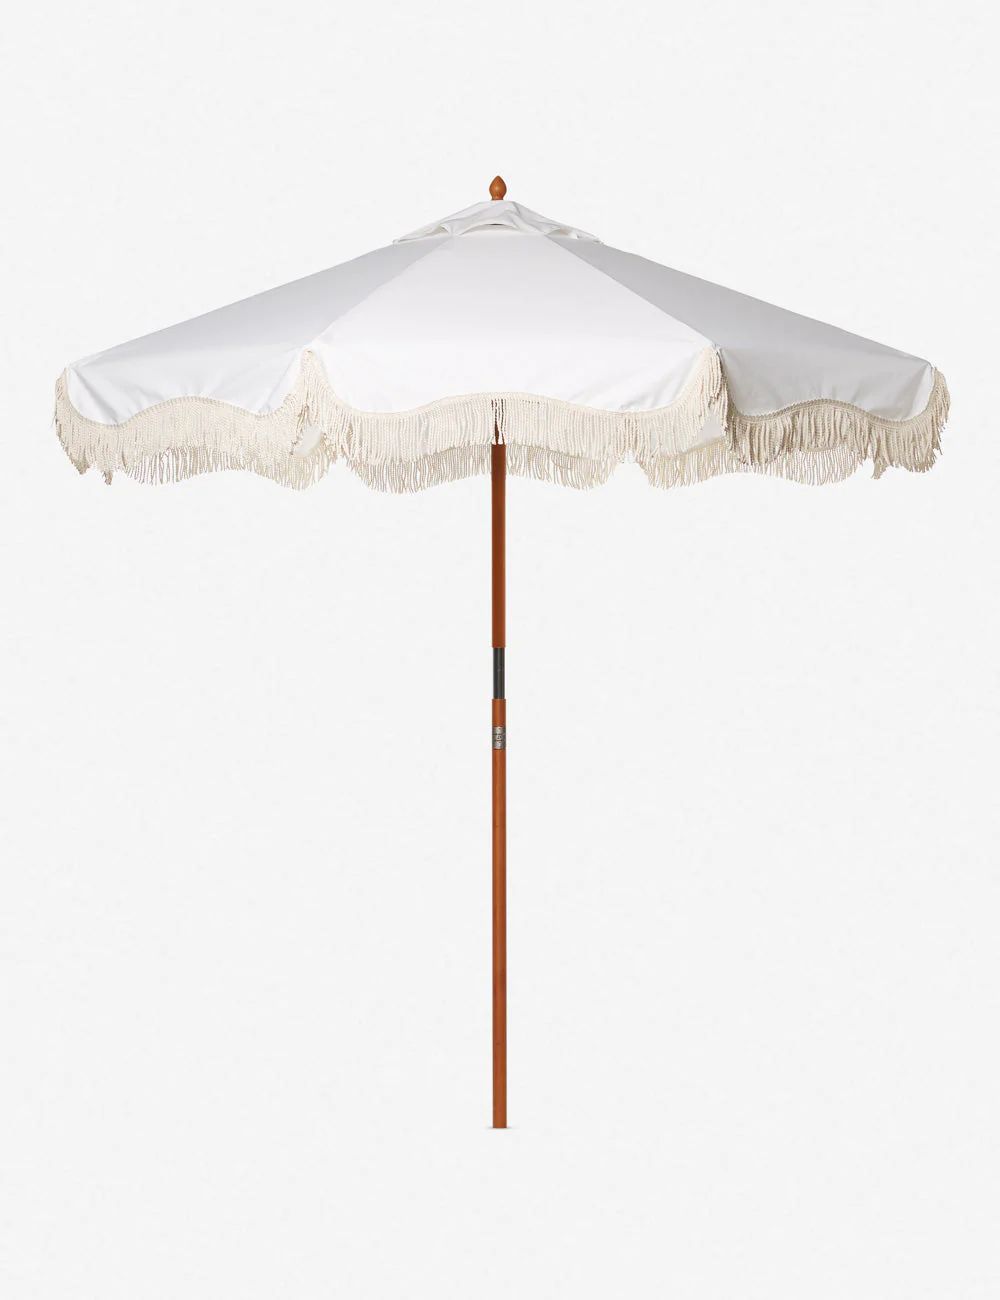 Market Umbrella by Business & Pleasure Co. | Lulu and Georgia 